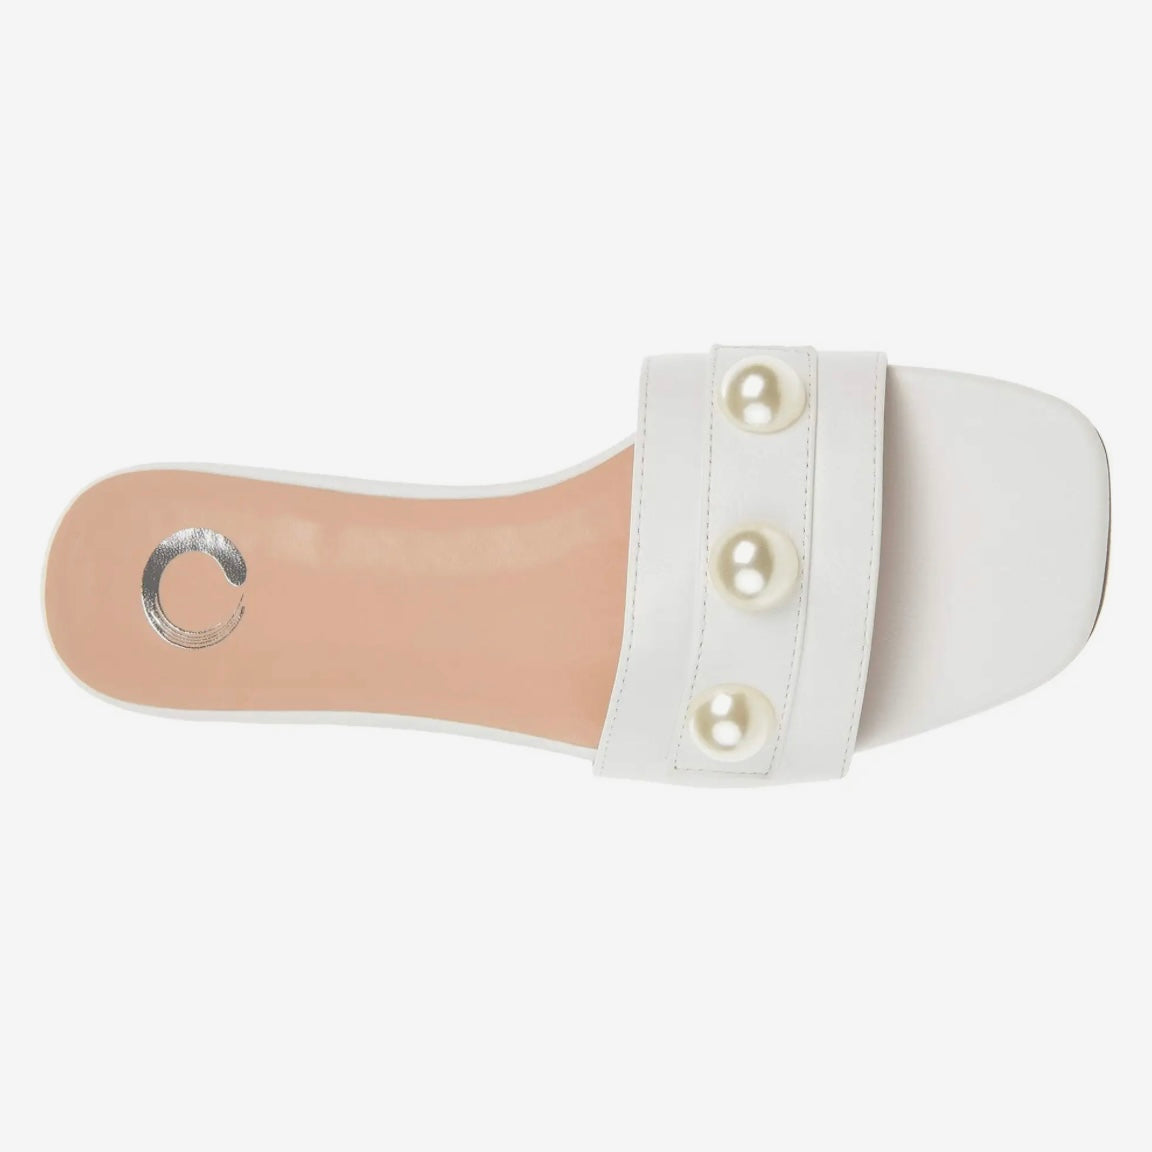 LEONIE White Slide Square Open Toe Size 6 Women's Flats Sandals